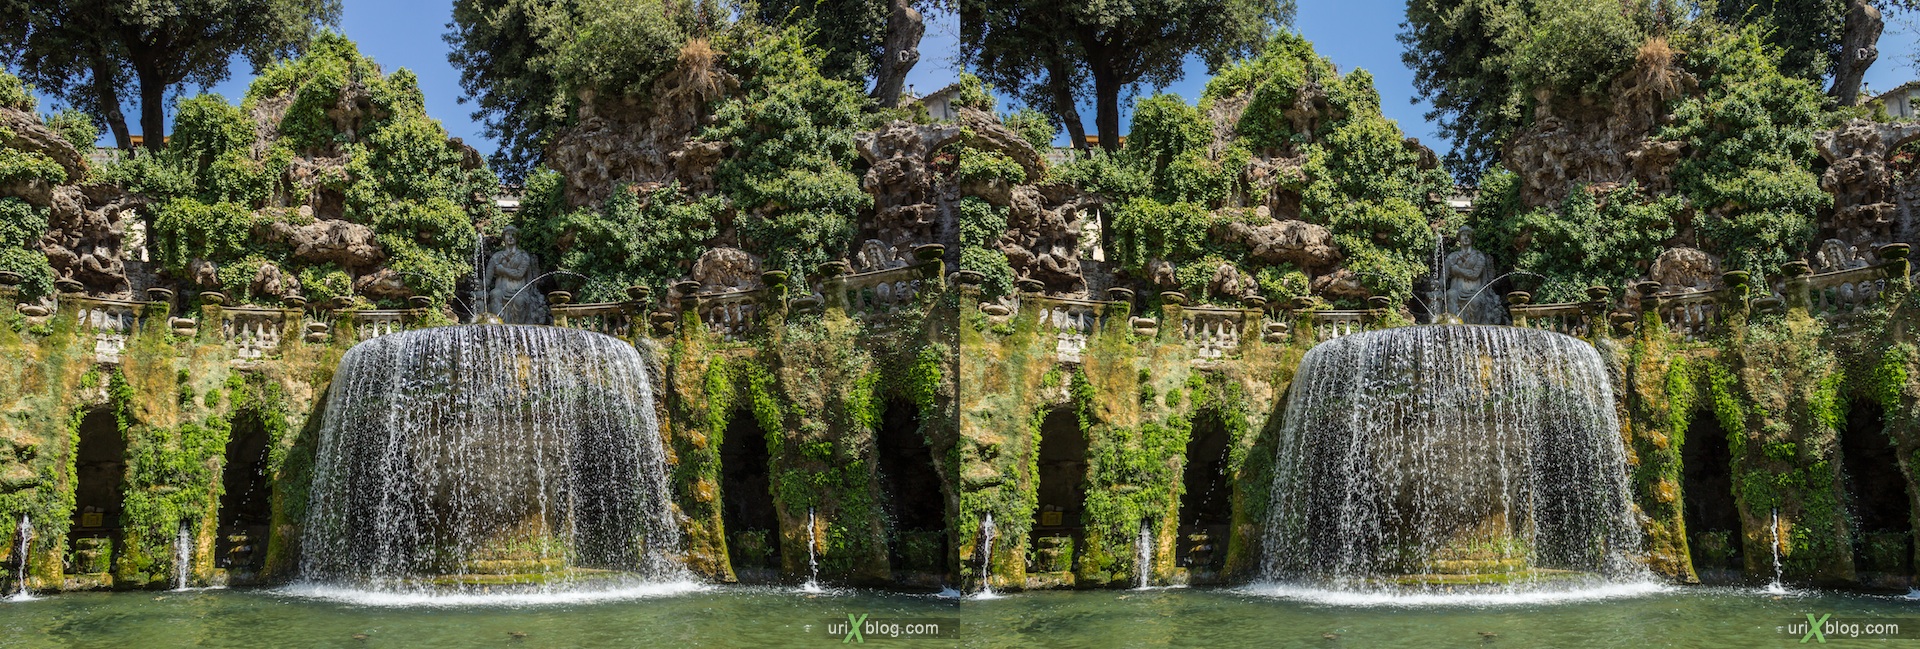 2012, Oval fountain, Fontana dell'Ovato, villa D'Este, Italy, Tivoli, Rome, 3D, stereo pair, cross-eyed, crossview, cross view stereo pair